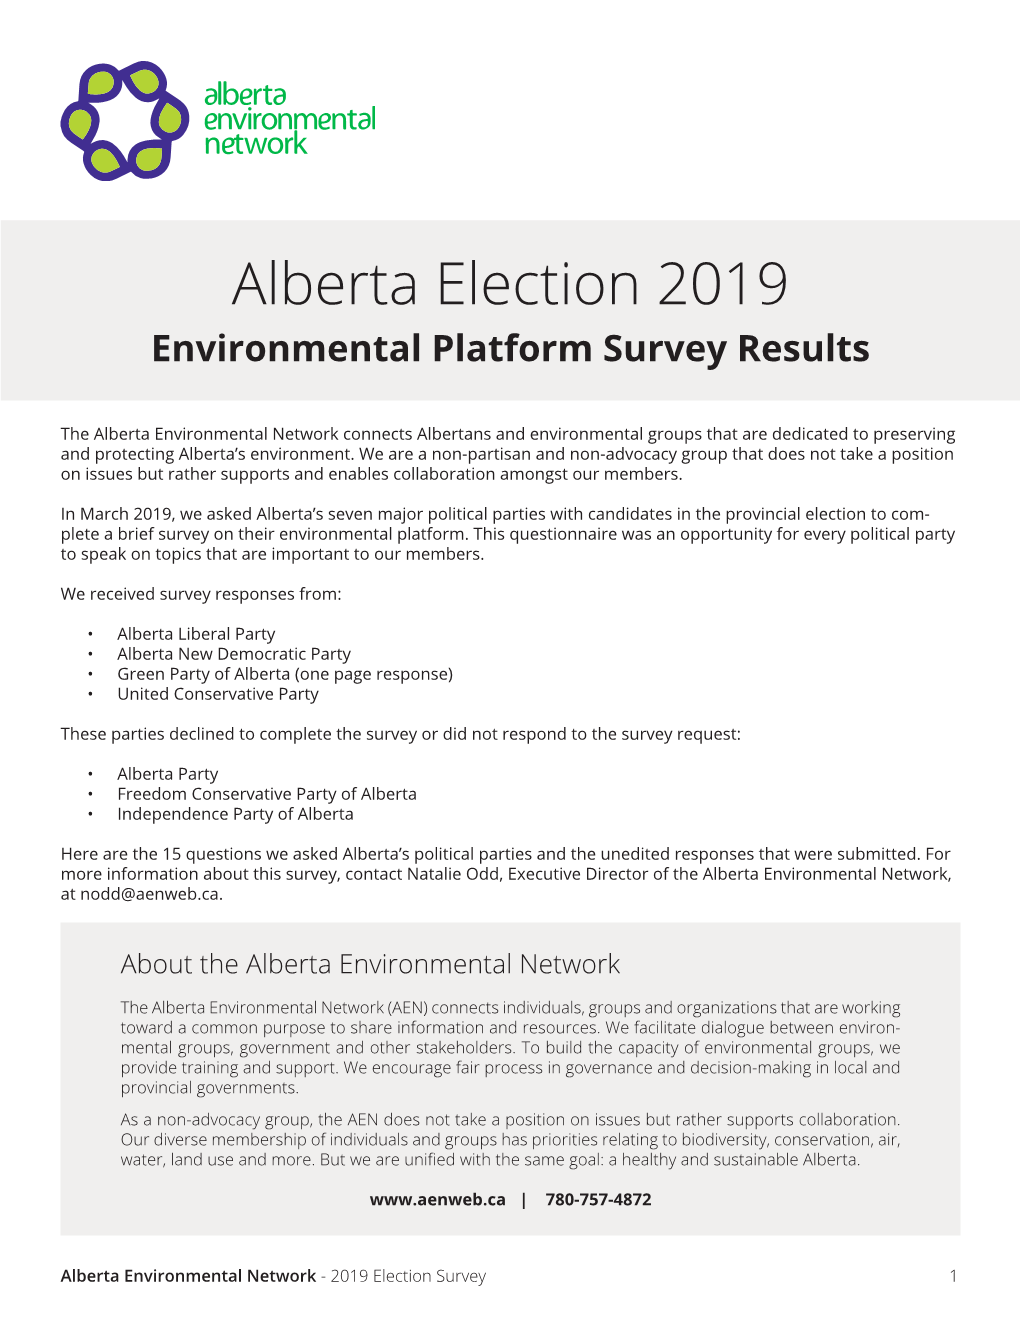 See the Responses to the AEN Environmental Platform Survey